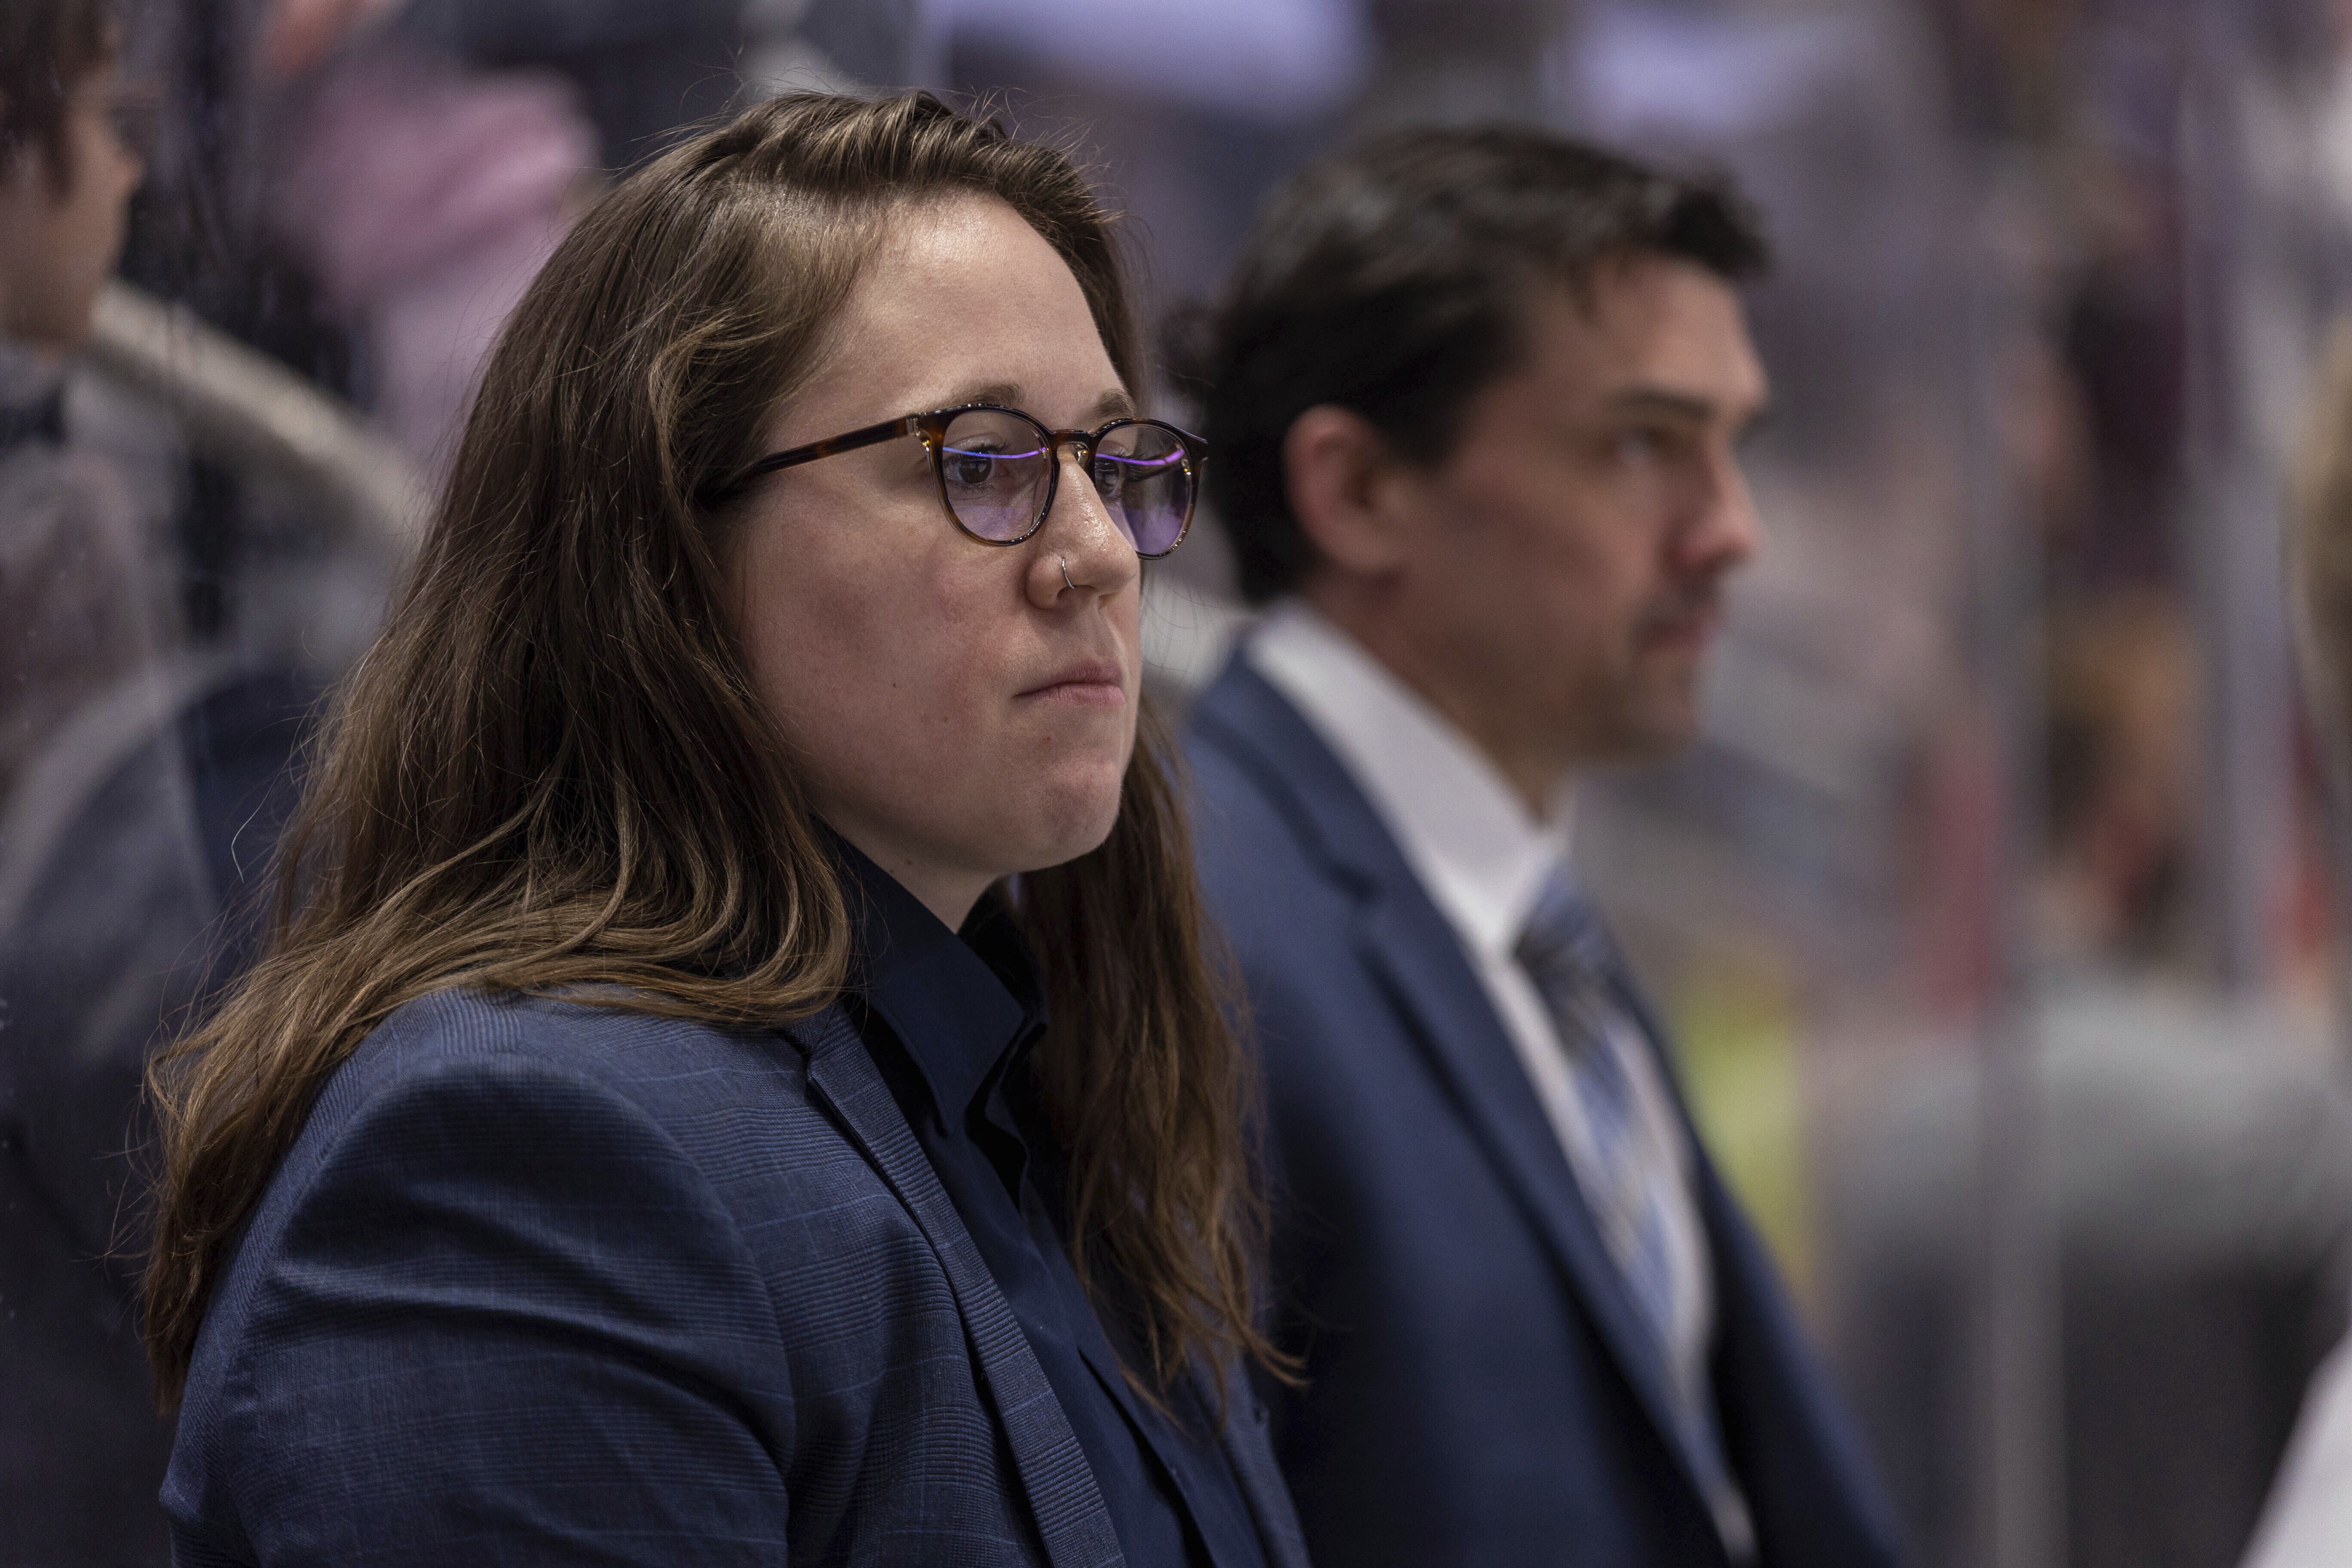 NJ Devils Promote Team's First Female Assistant General Manager